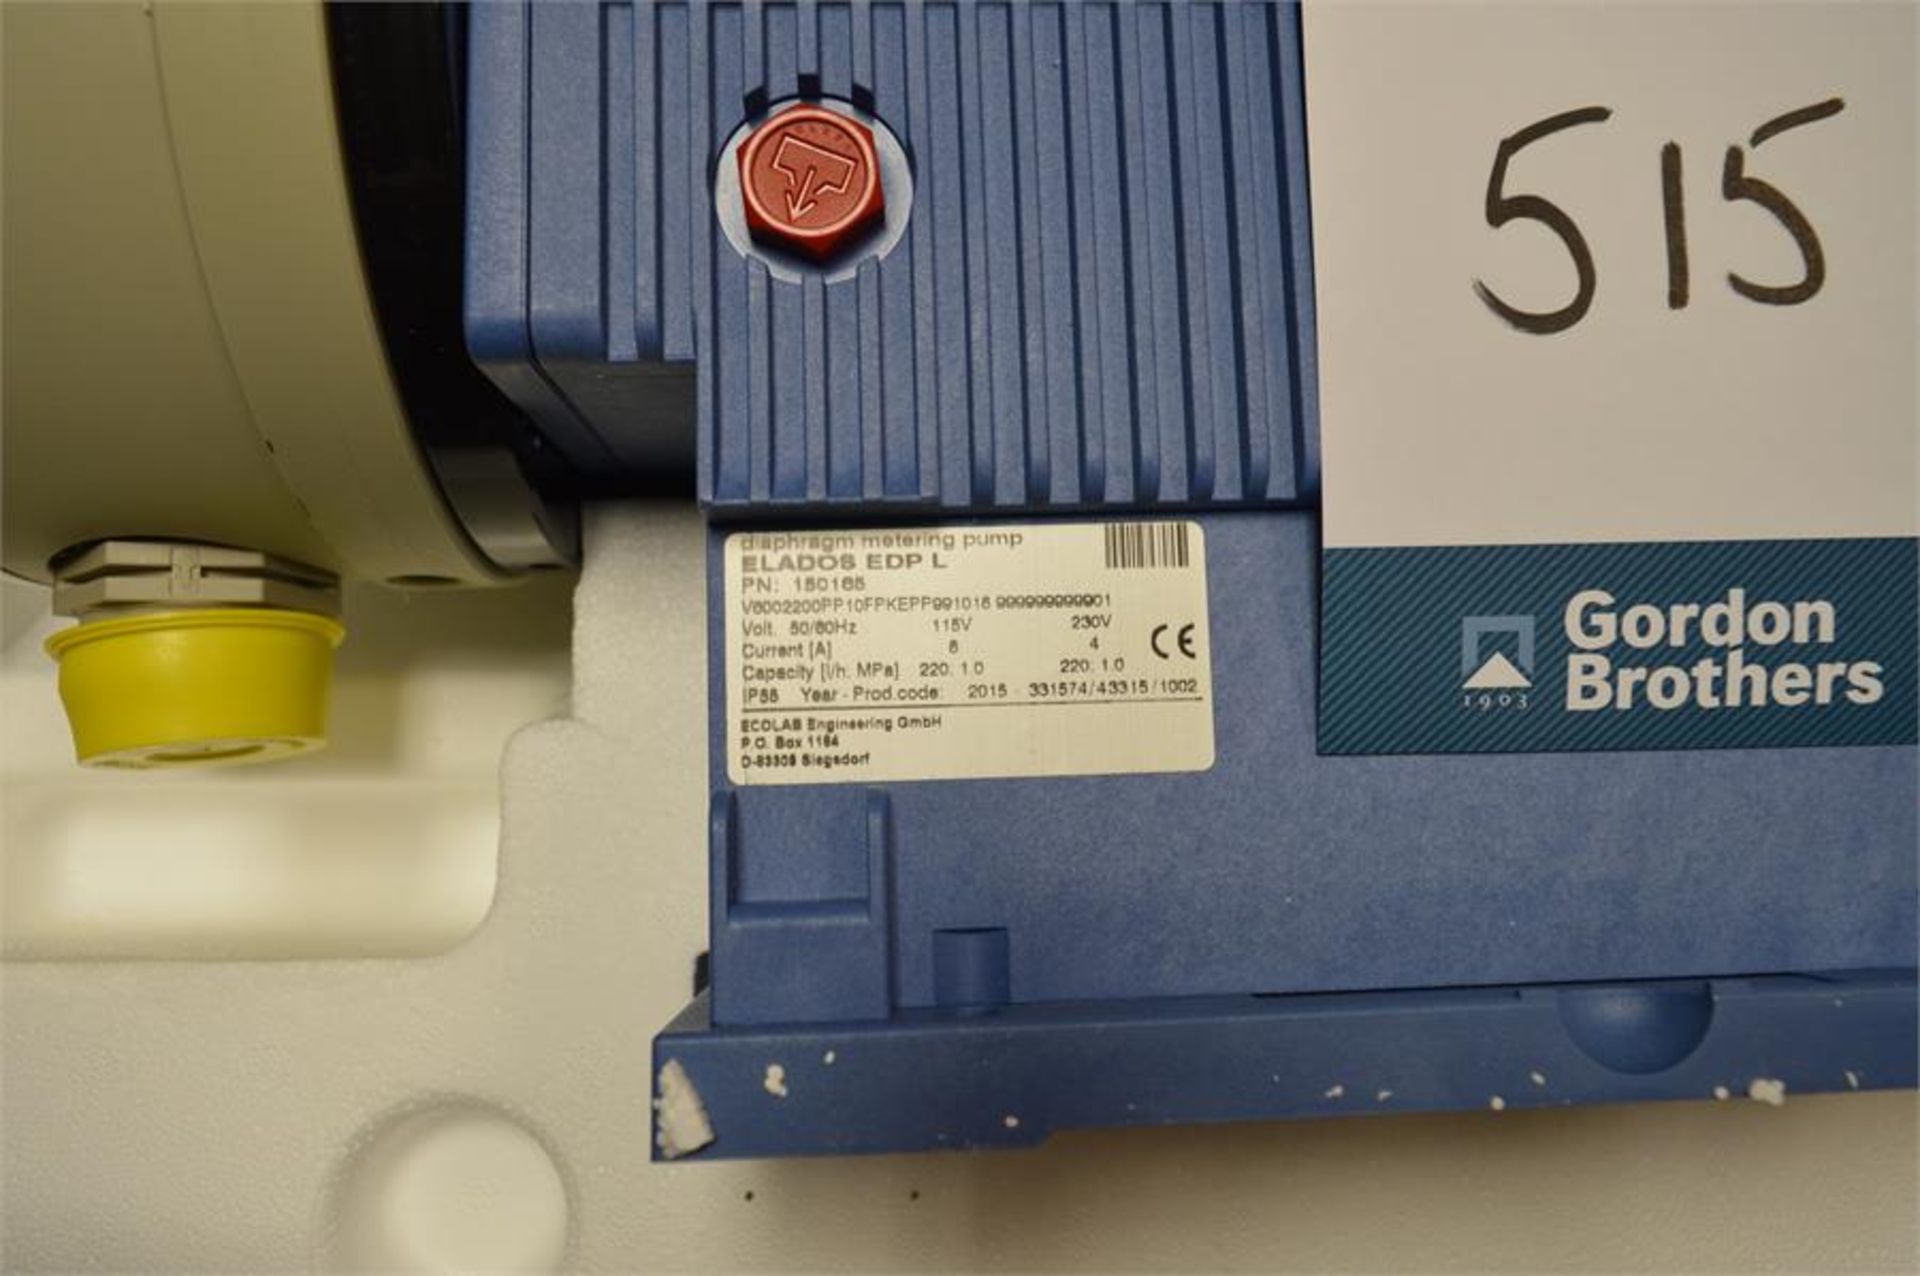 Ecolab, Elados EDPL V60 diaphragm metering pump (2015) (boxed/opened) - Image 2 of 3